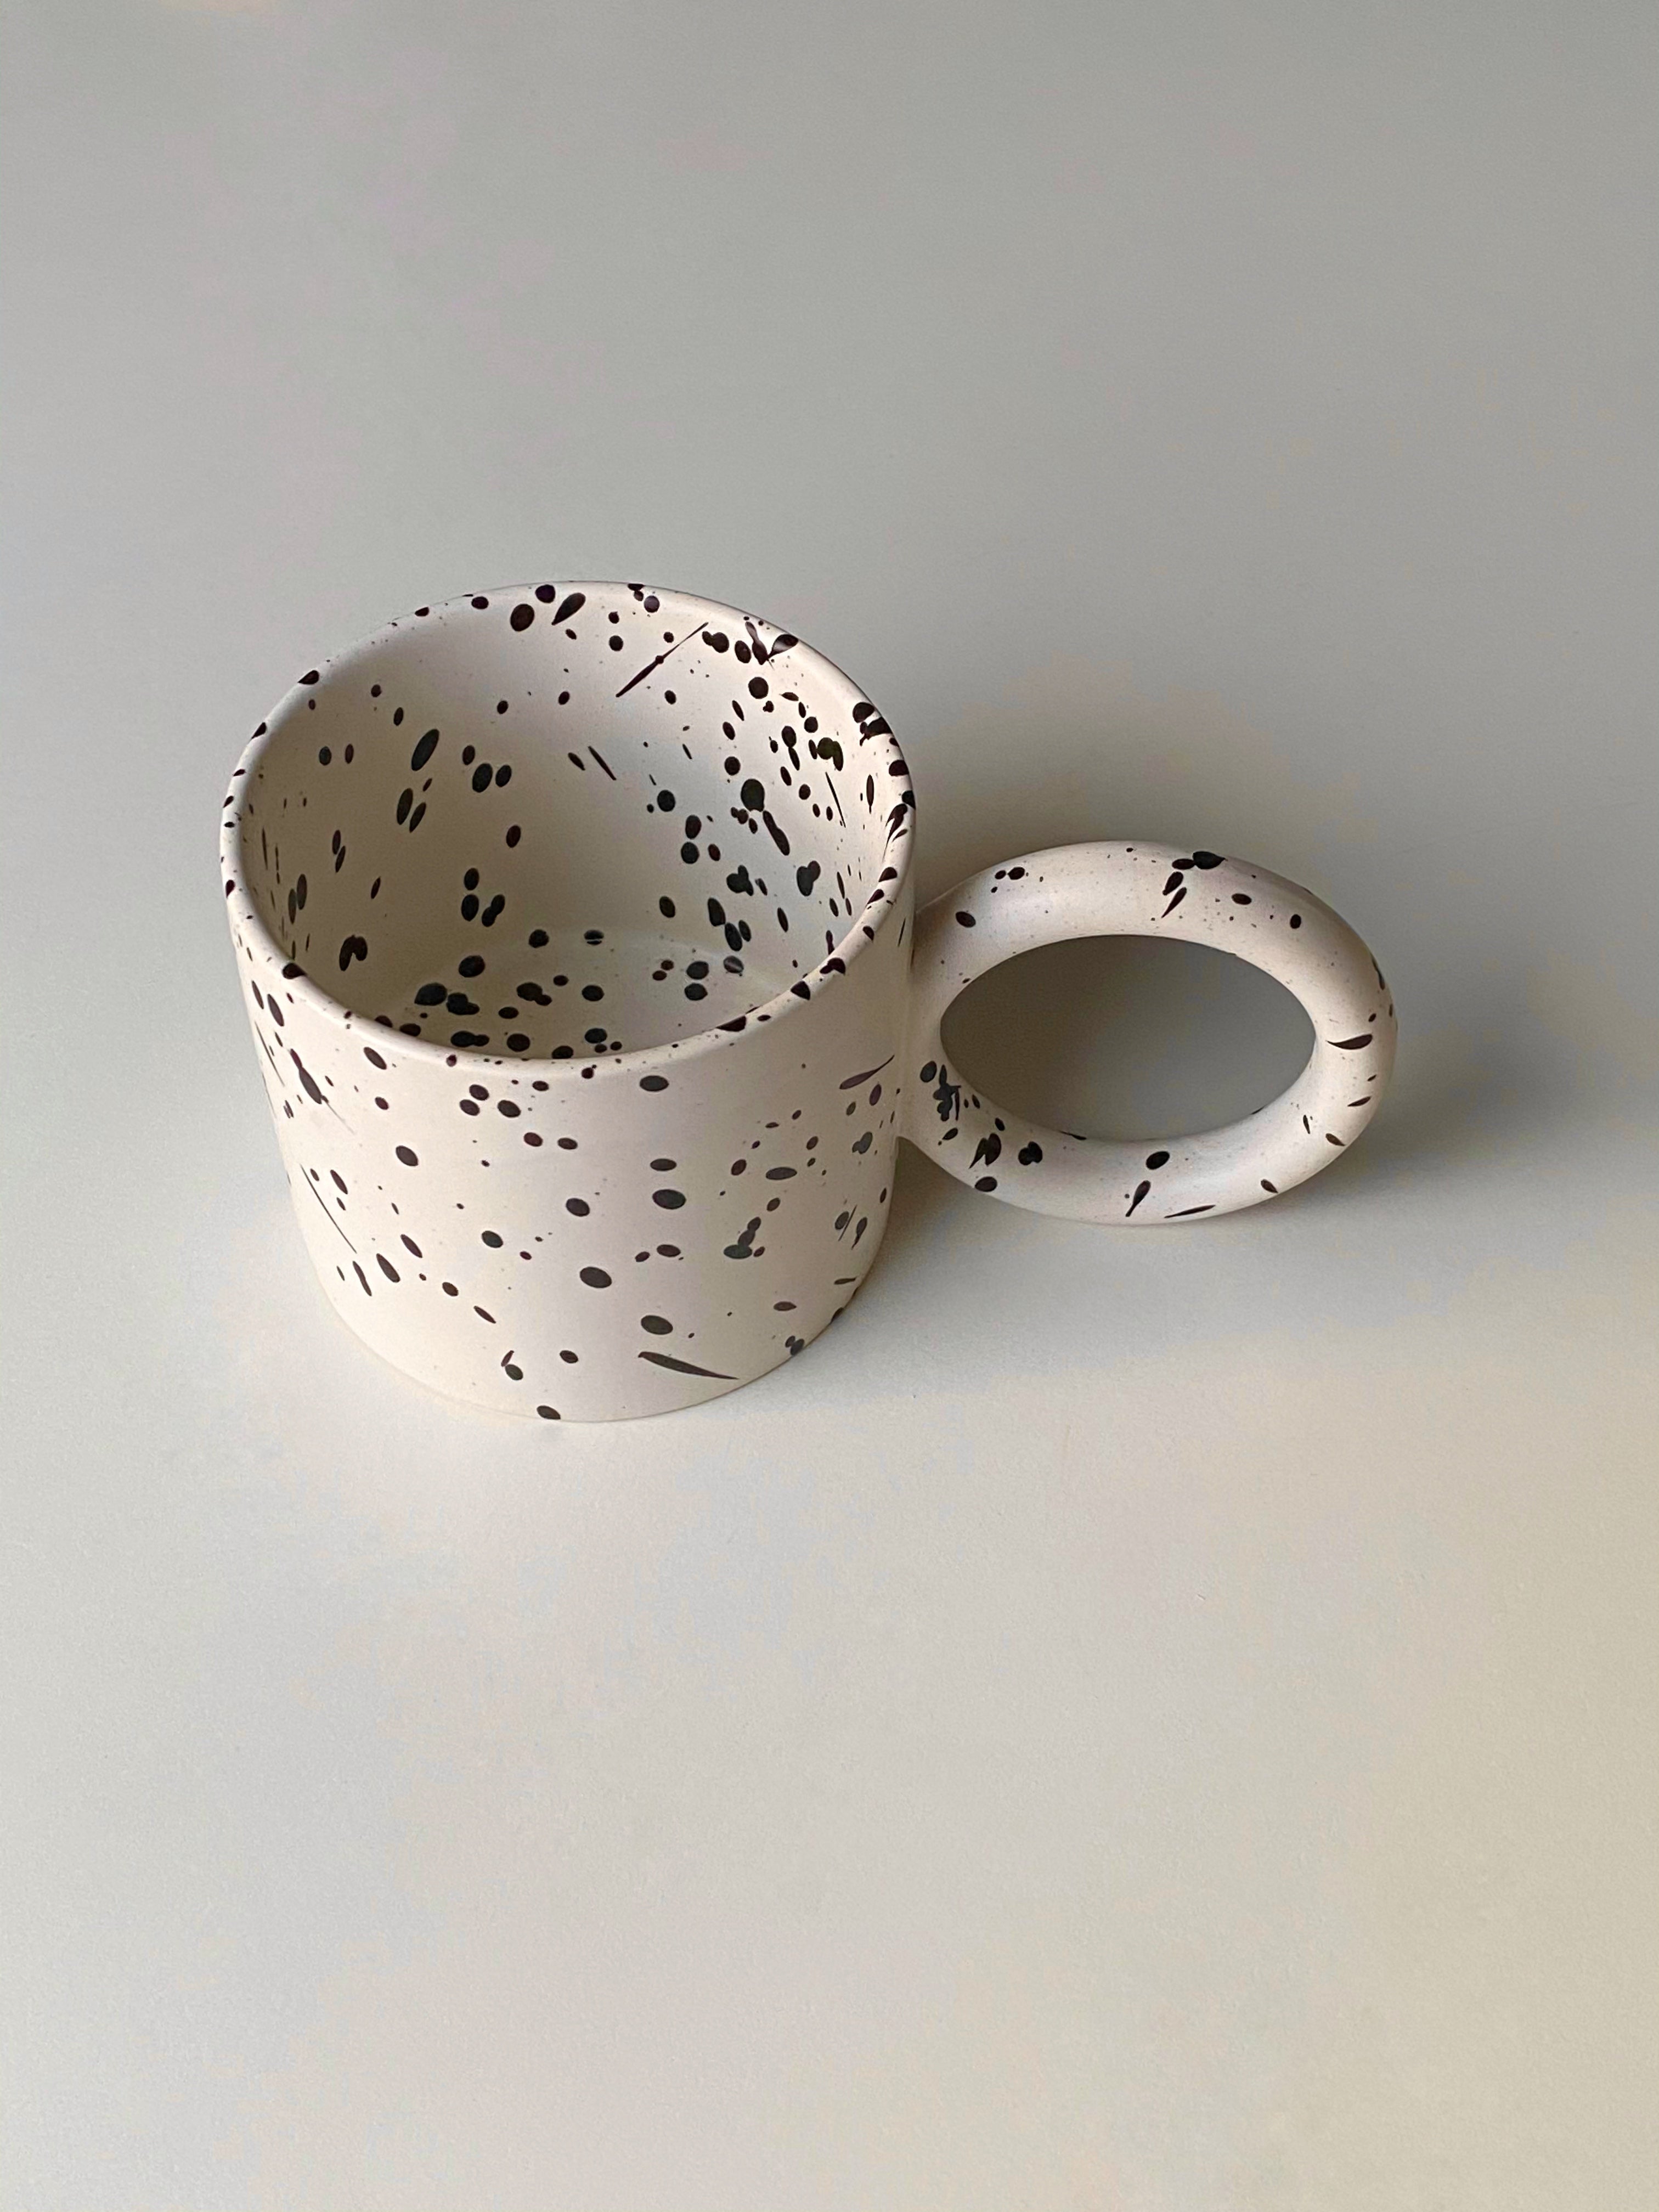 Black White Swirl Coffee Mug by Len-Stanley Yesh - Fine Art America